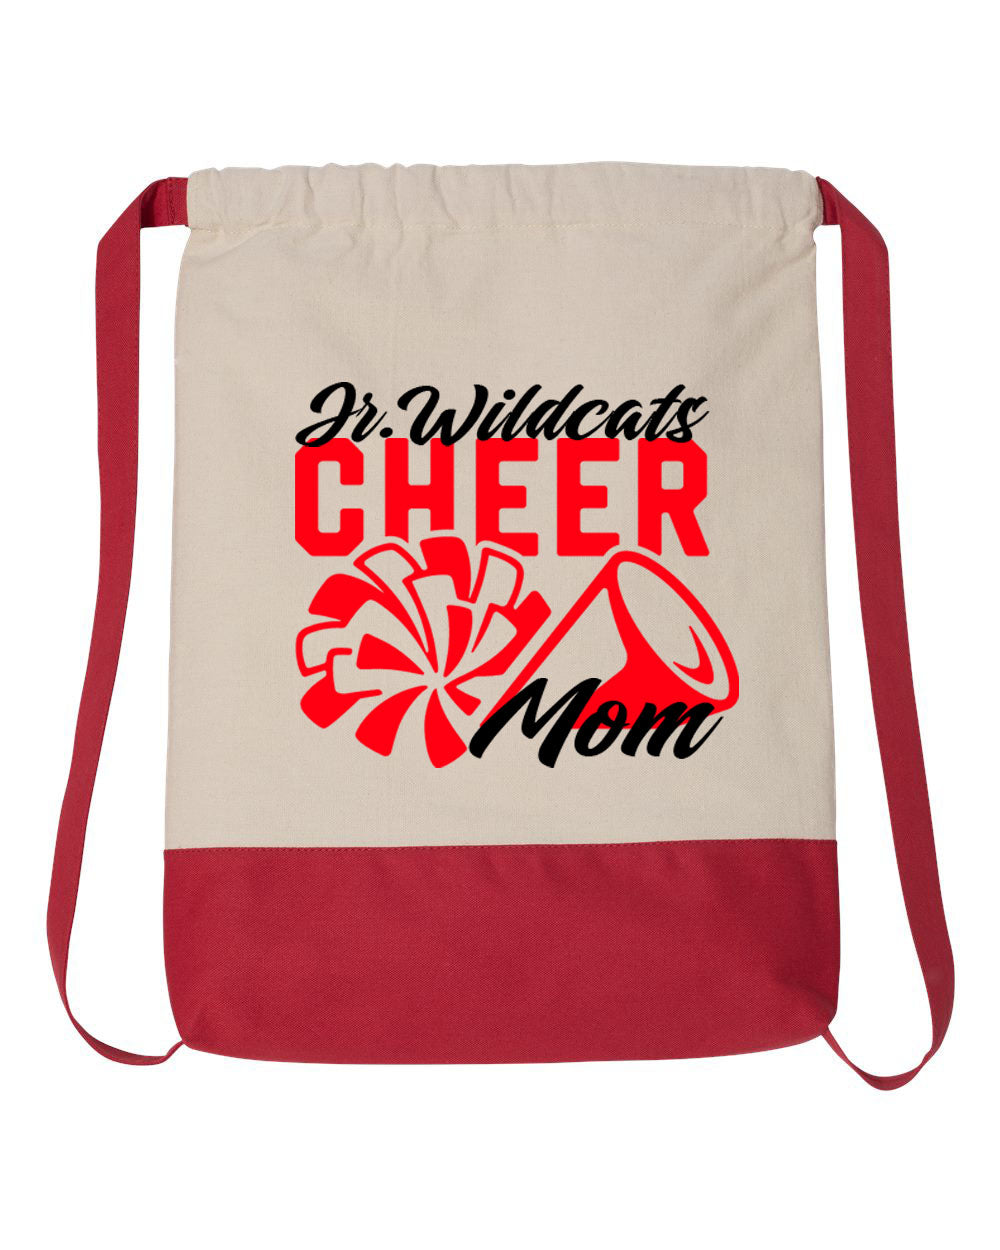 High Point Cheer Design 4 Drawstring Bag